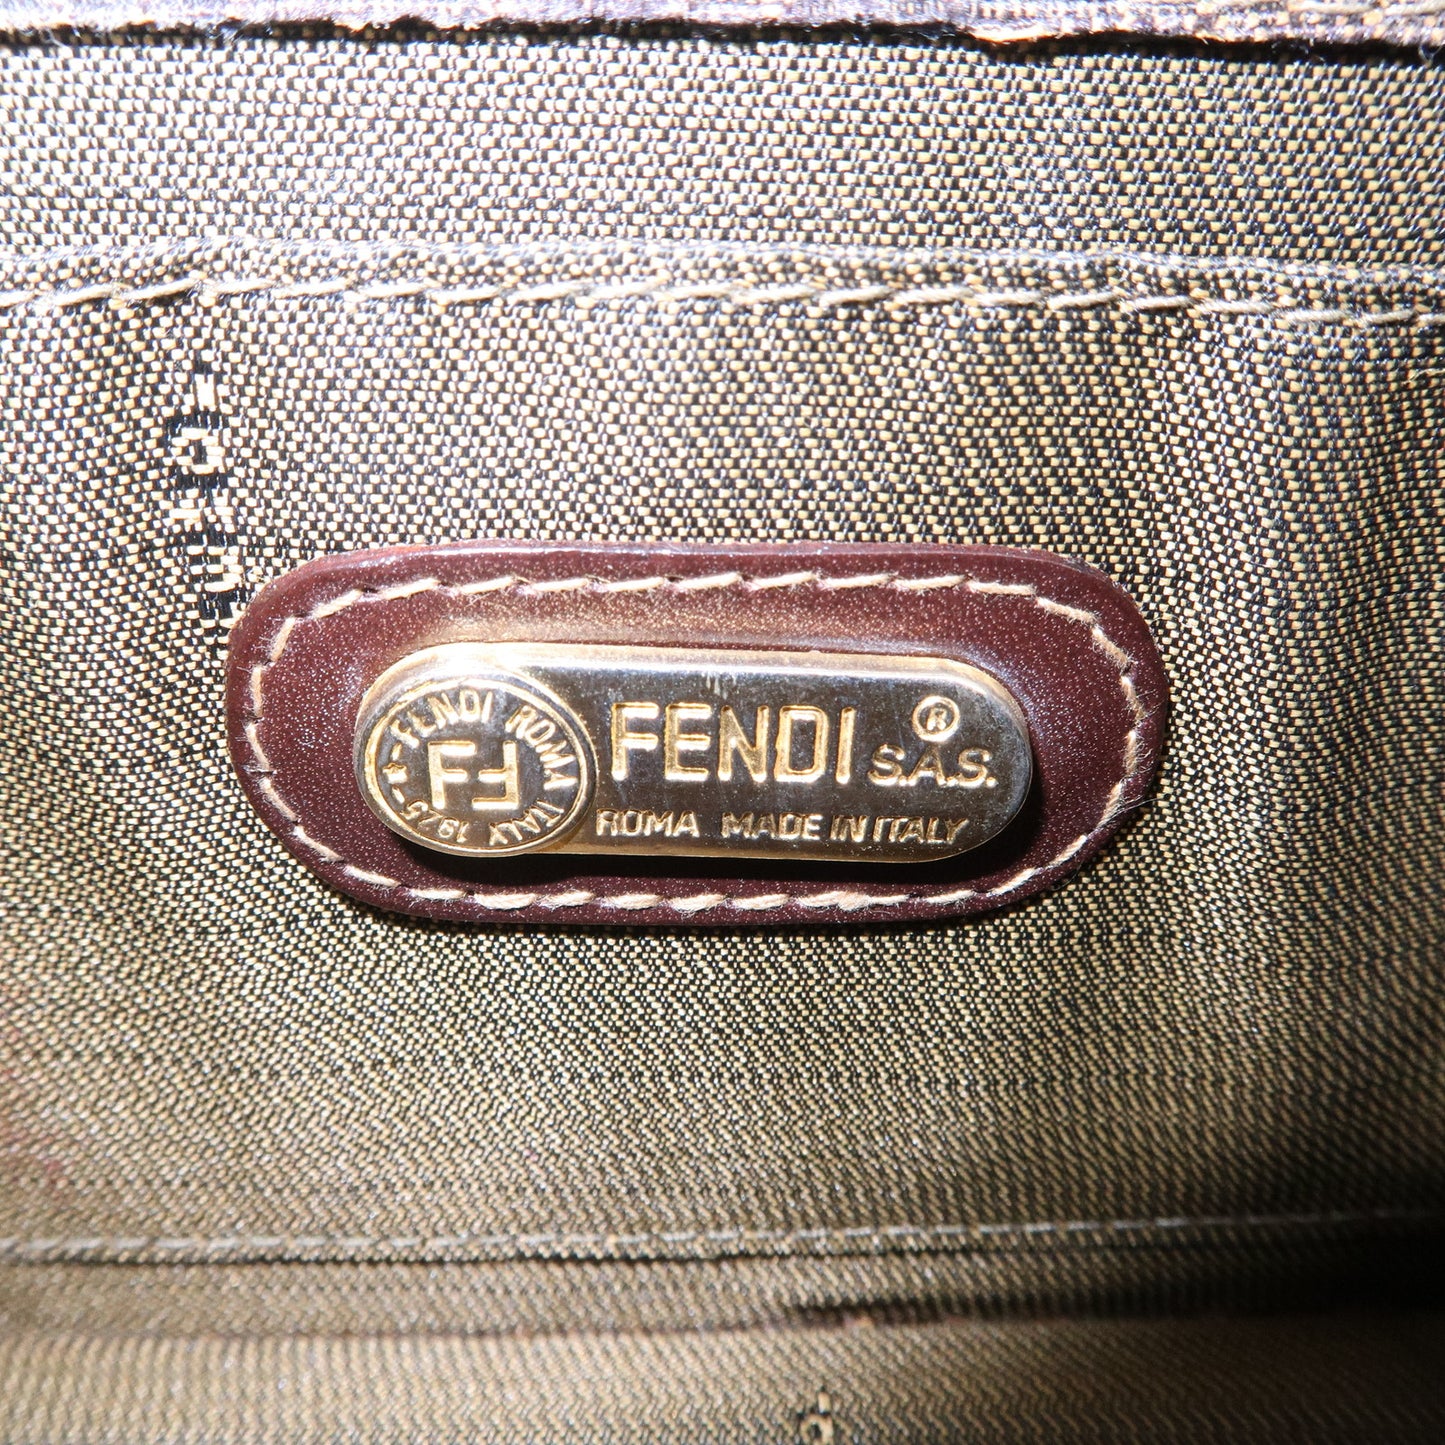 FENDI Zucca Canvas Leather Crossbody Mini Shoulder Bag